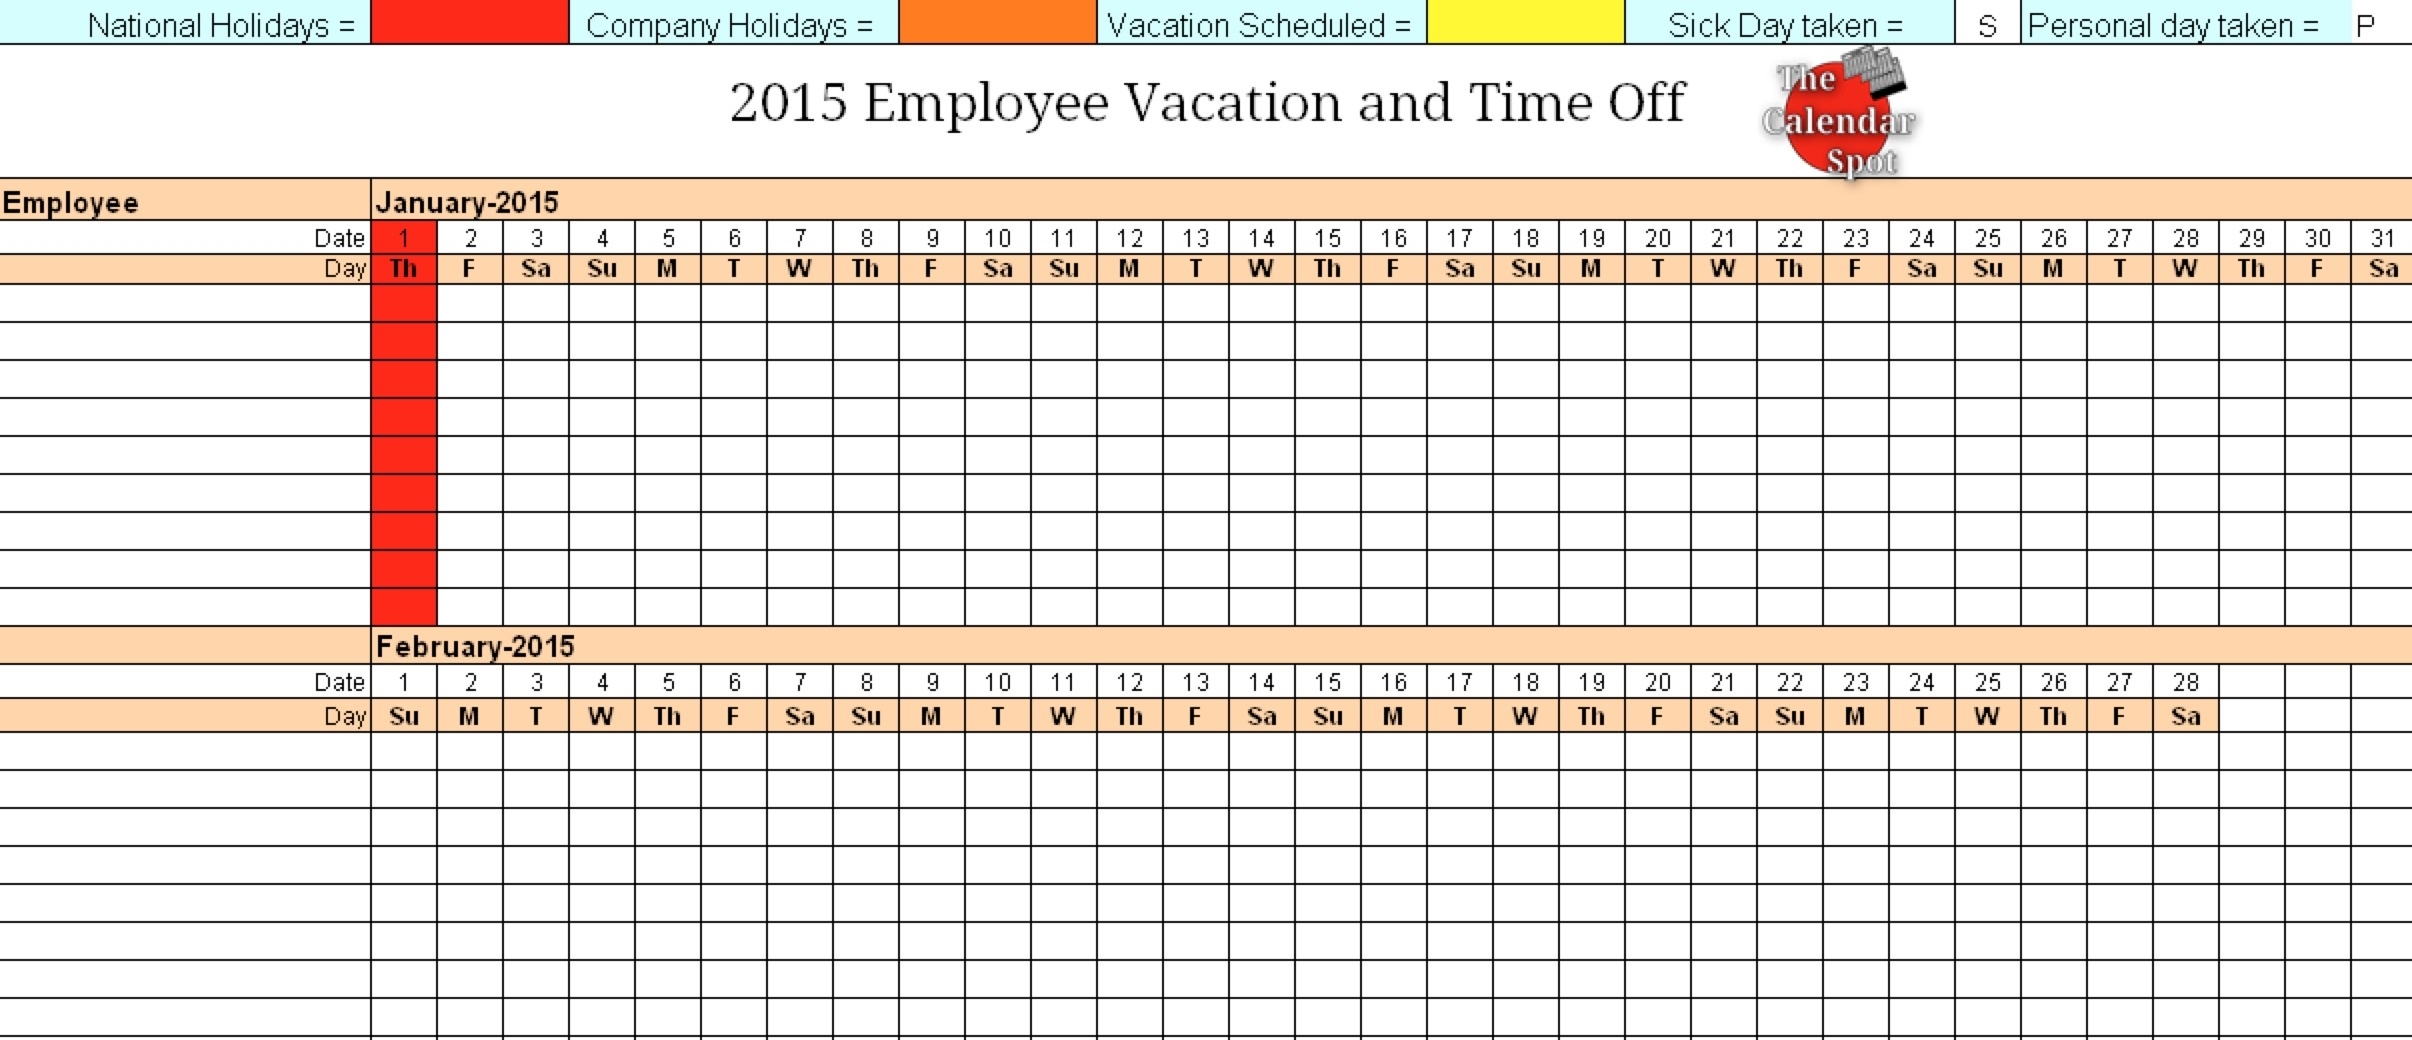 Vacation Schedule Calendar Template - Yeniscale.co  Year At A Glance Calendar - Vacation Schedule For Staff